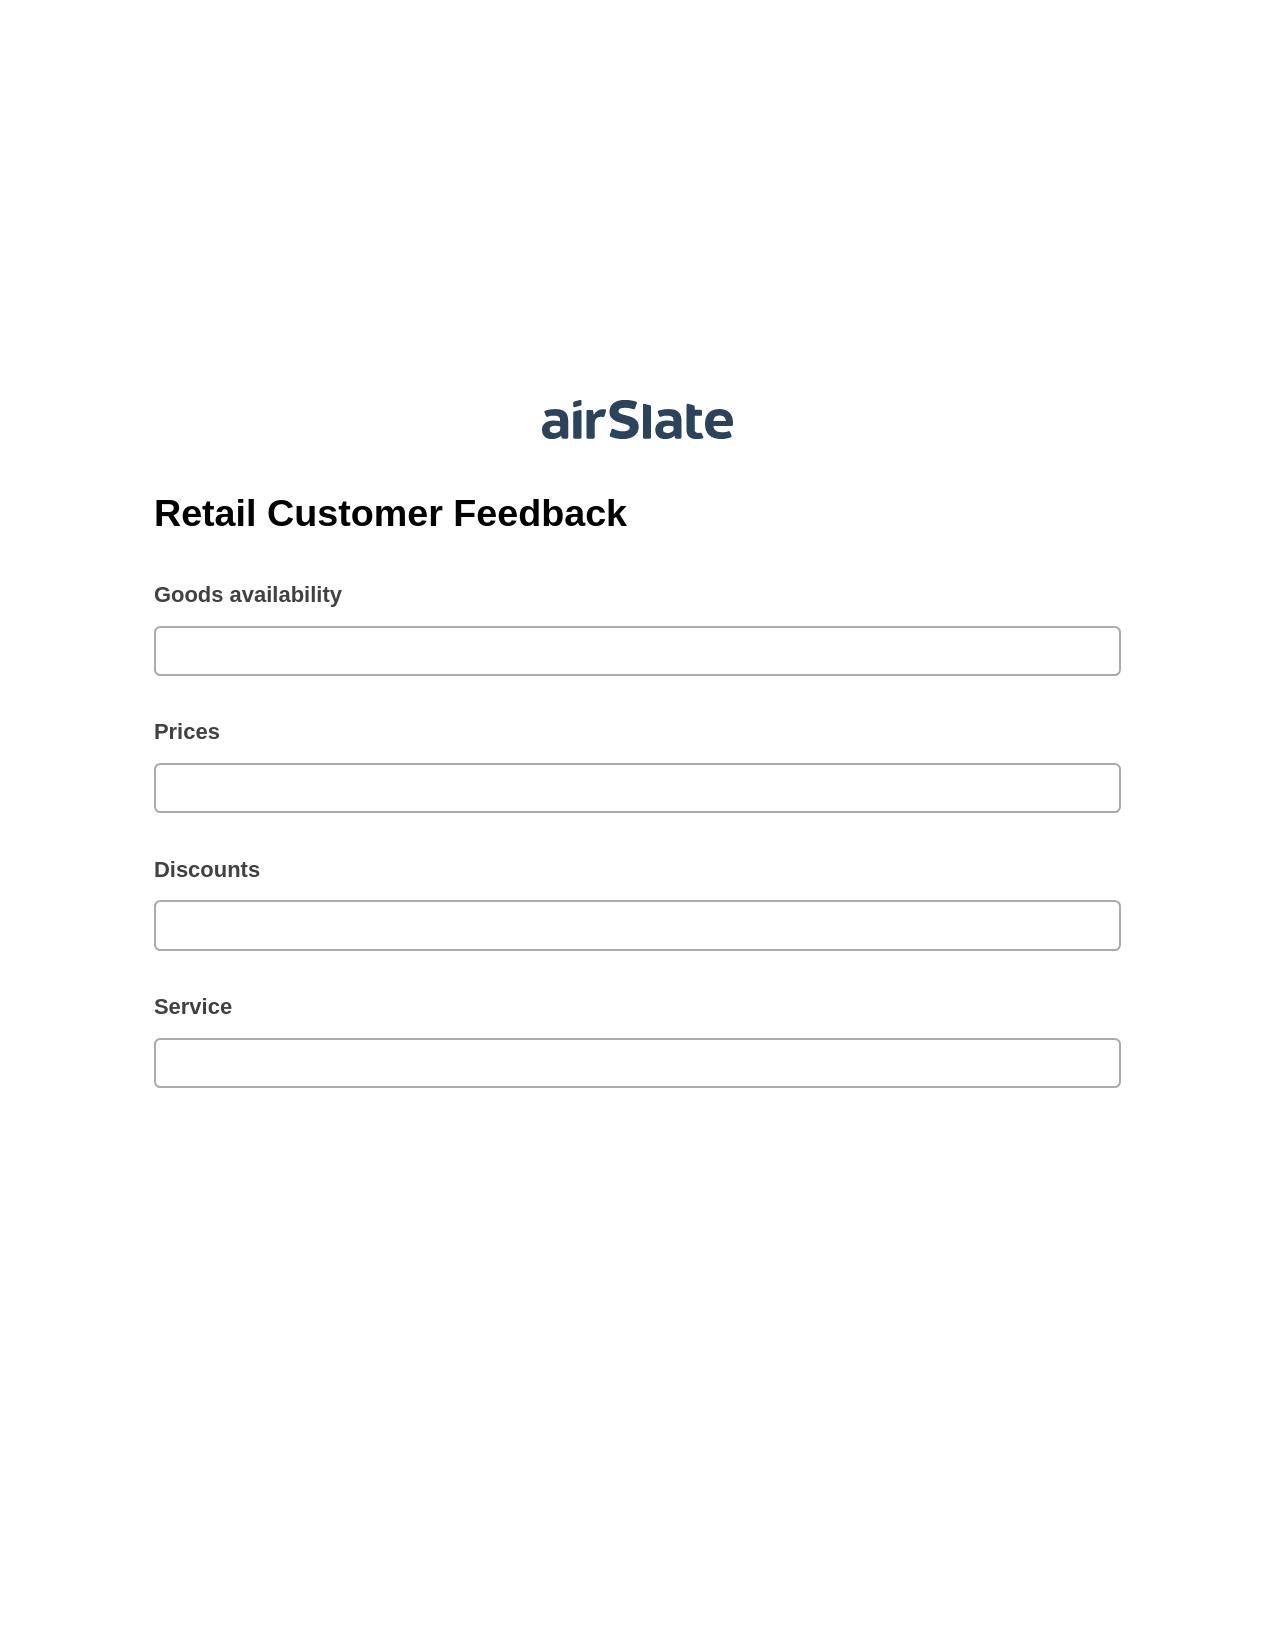 Retail Customer Feedback Pre-fill from Excel Spreadsheet Bot, Create slate bot, Box Bot